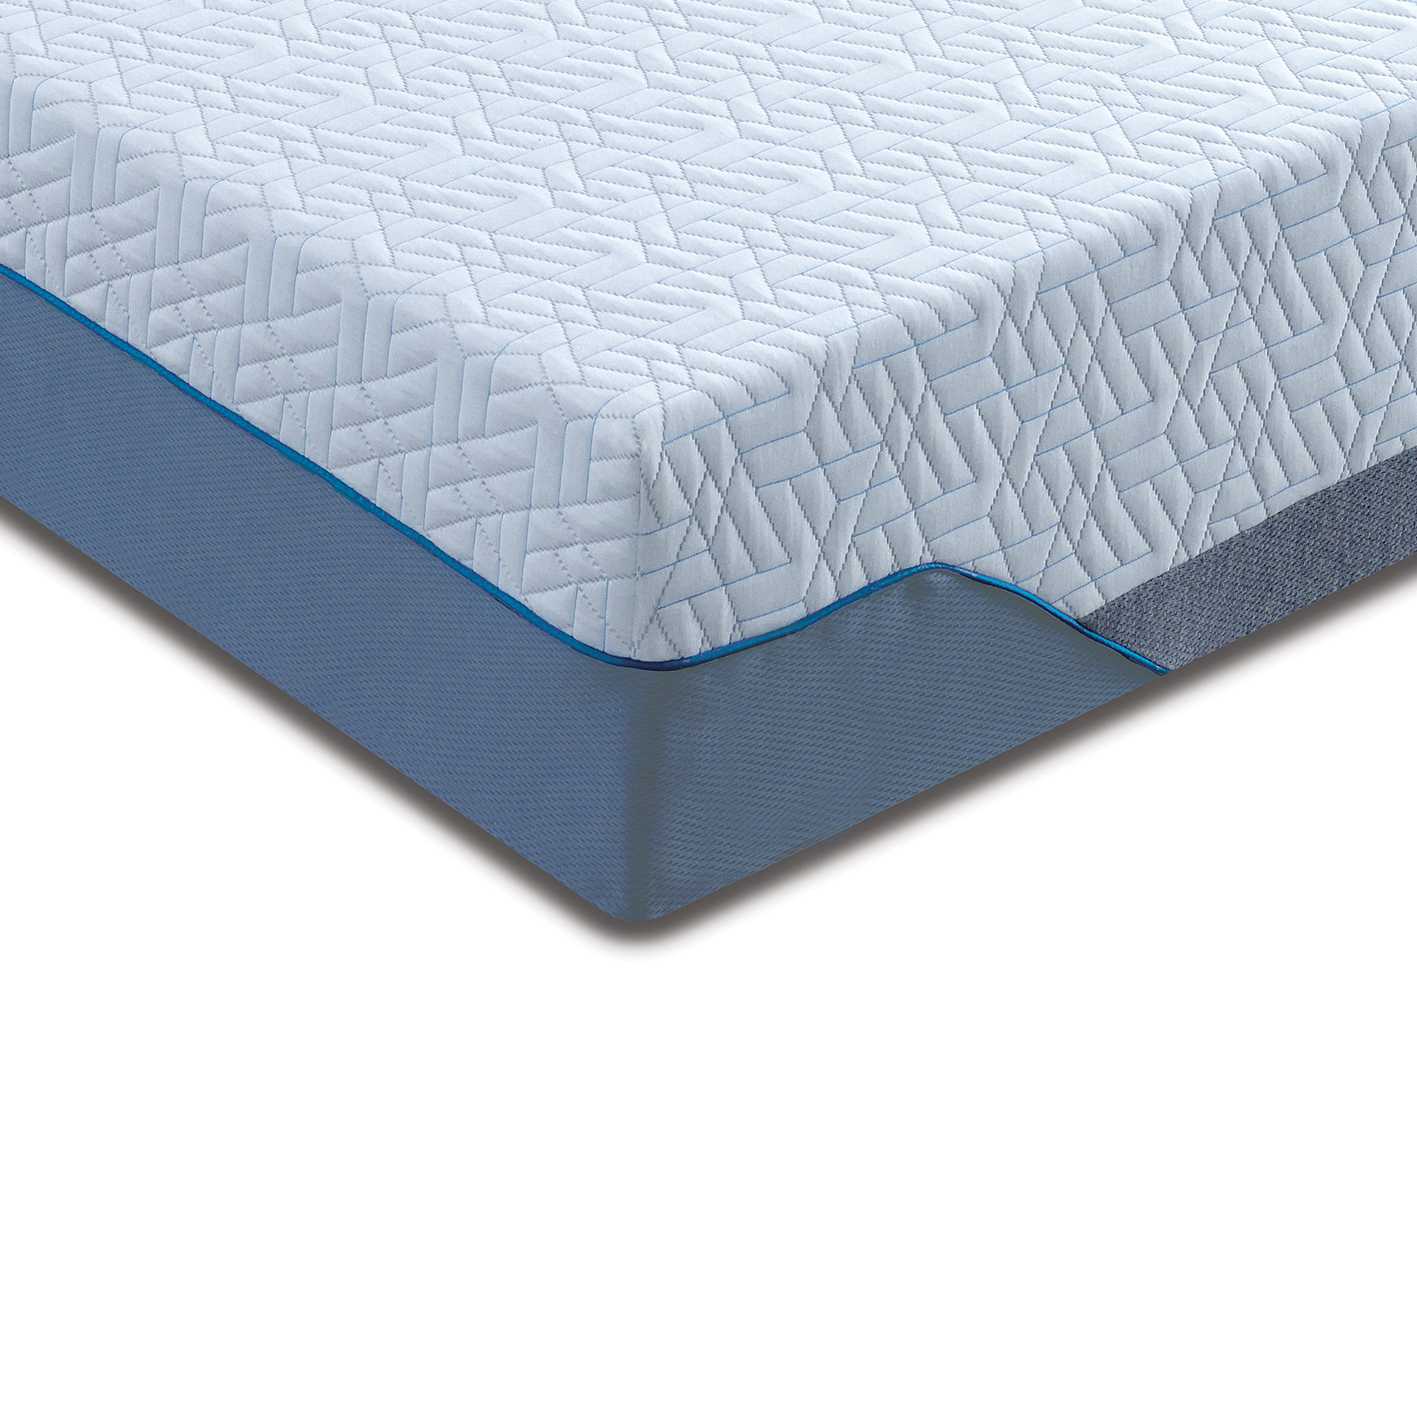 Pocket sprung mattress King 150cm